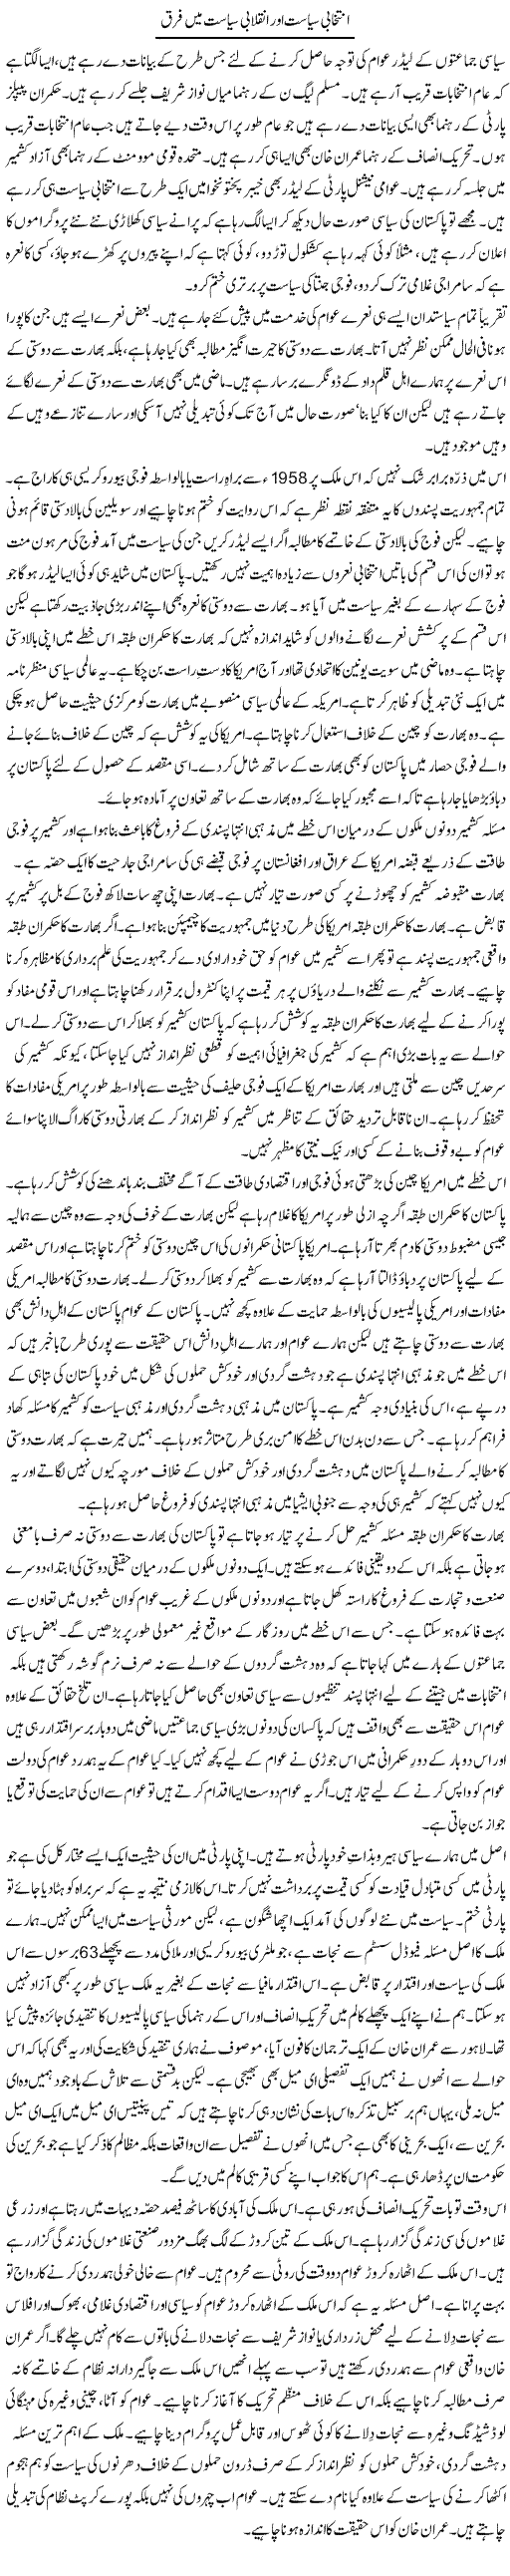 Types of Politics Express Column Zaheer Akhtar 20 June 2011